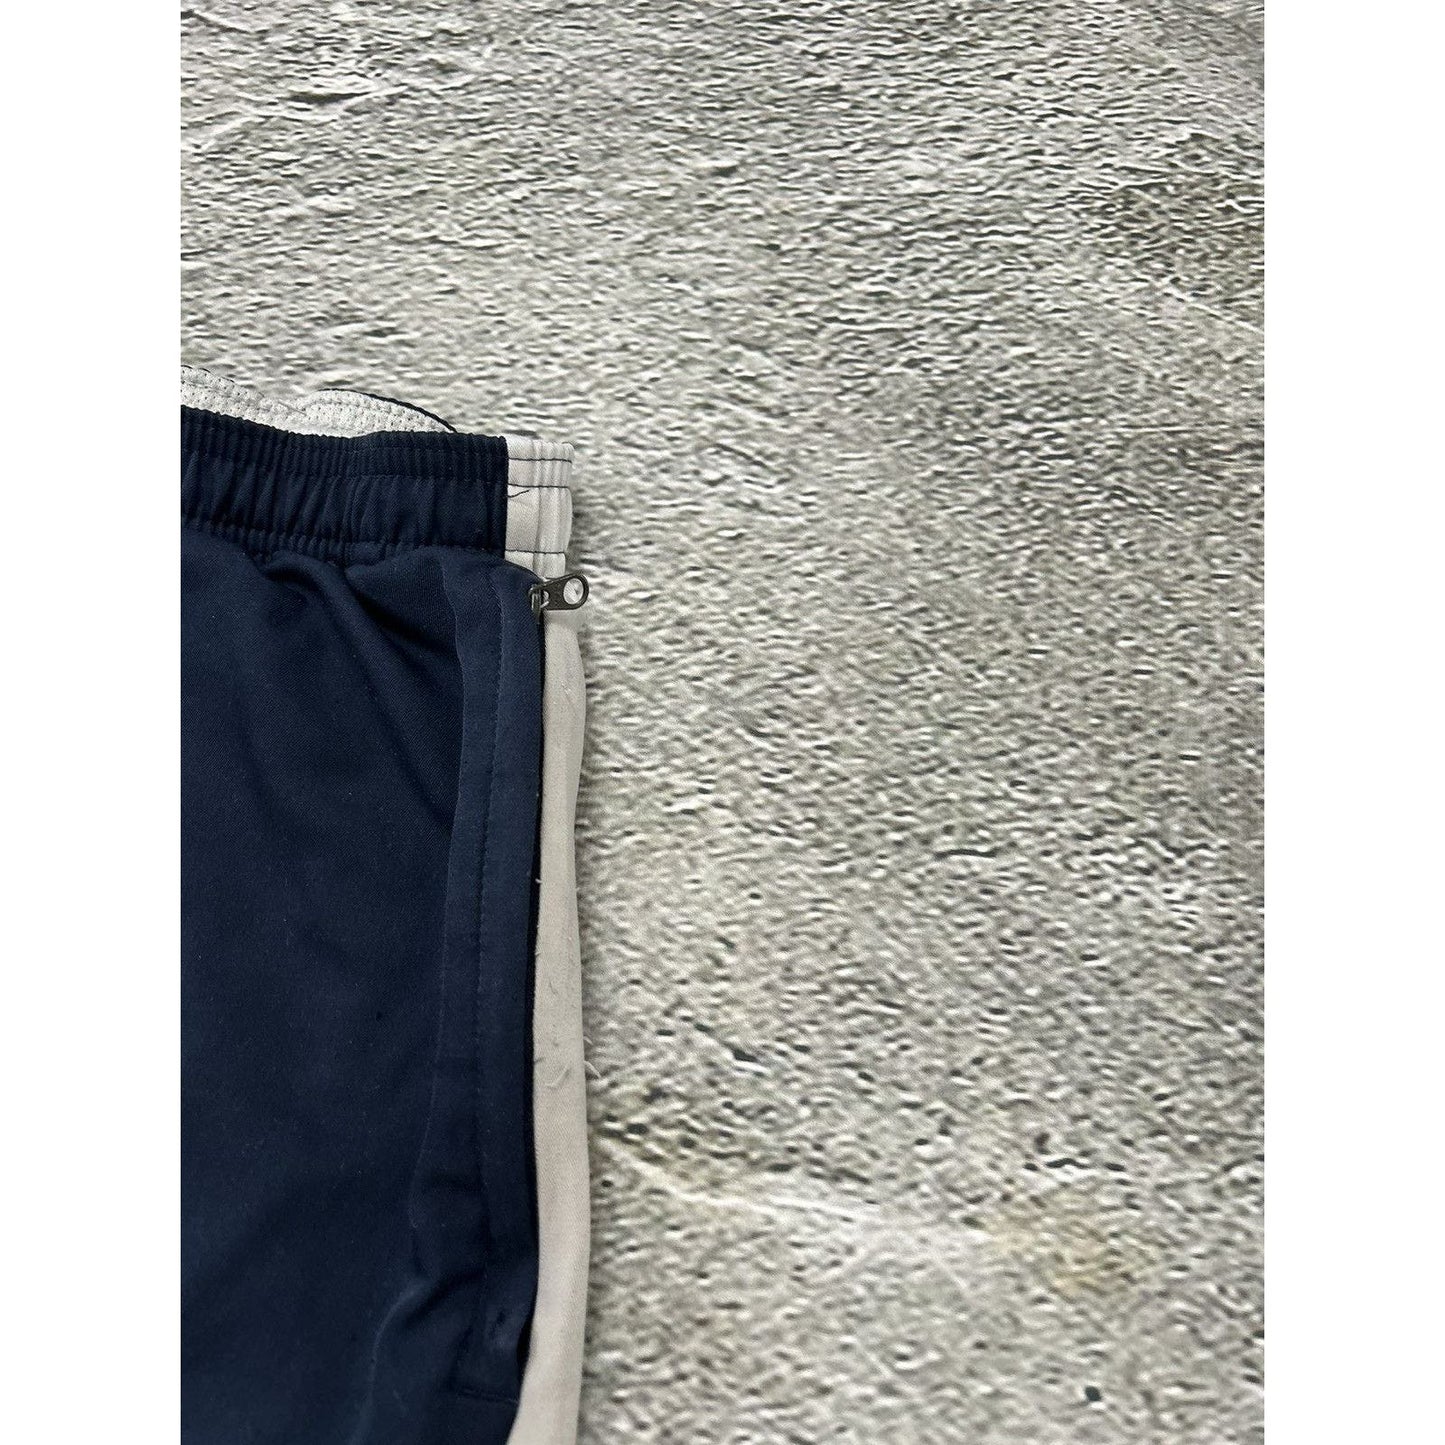 Nike vintage navy nylon track pants parachute small swoosh